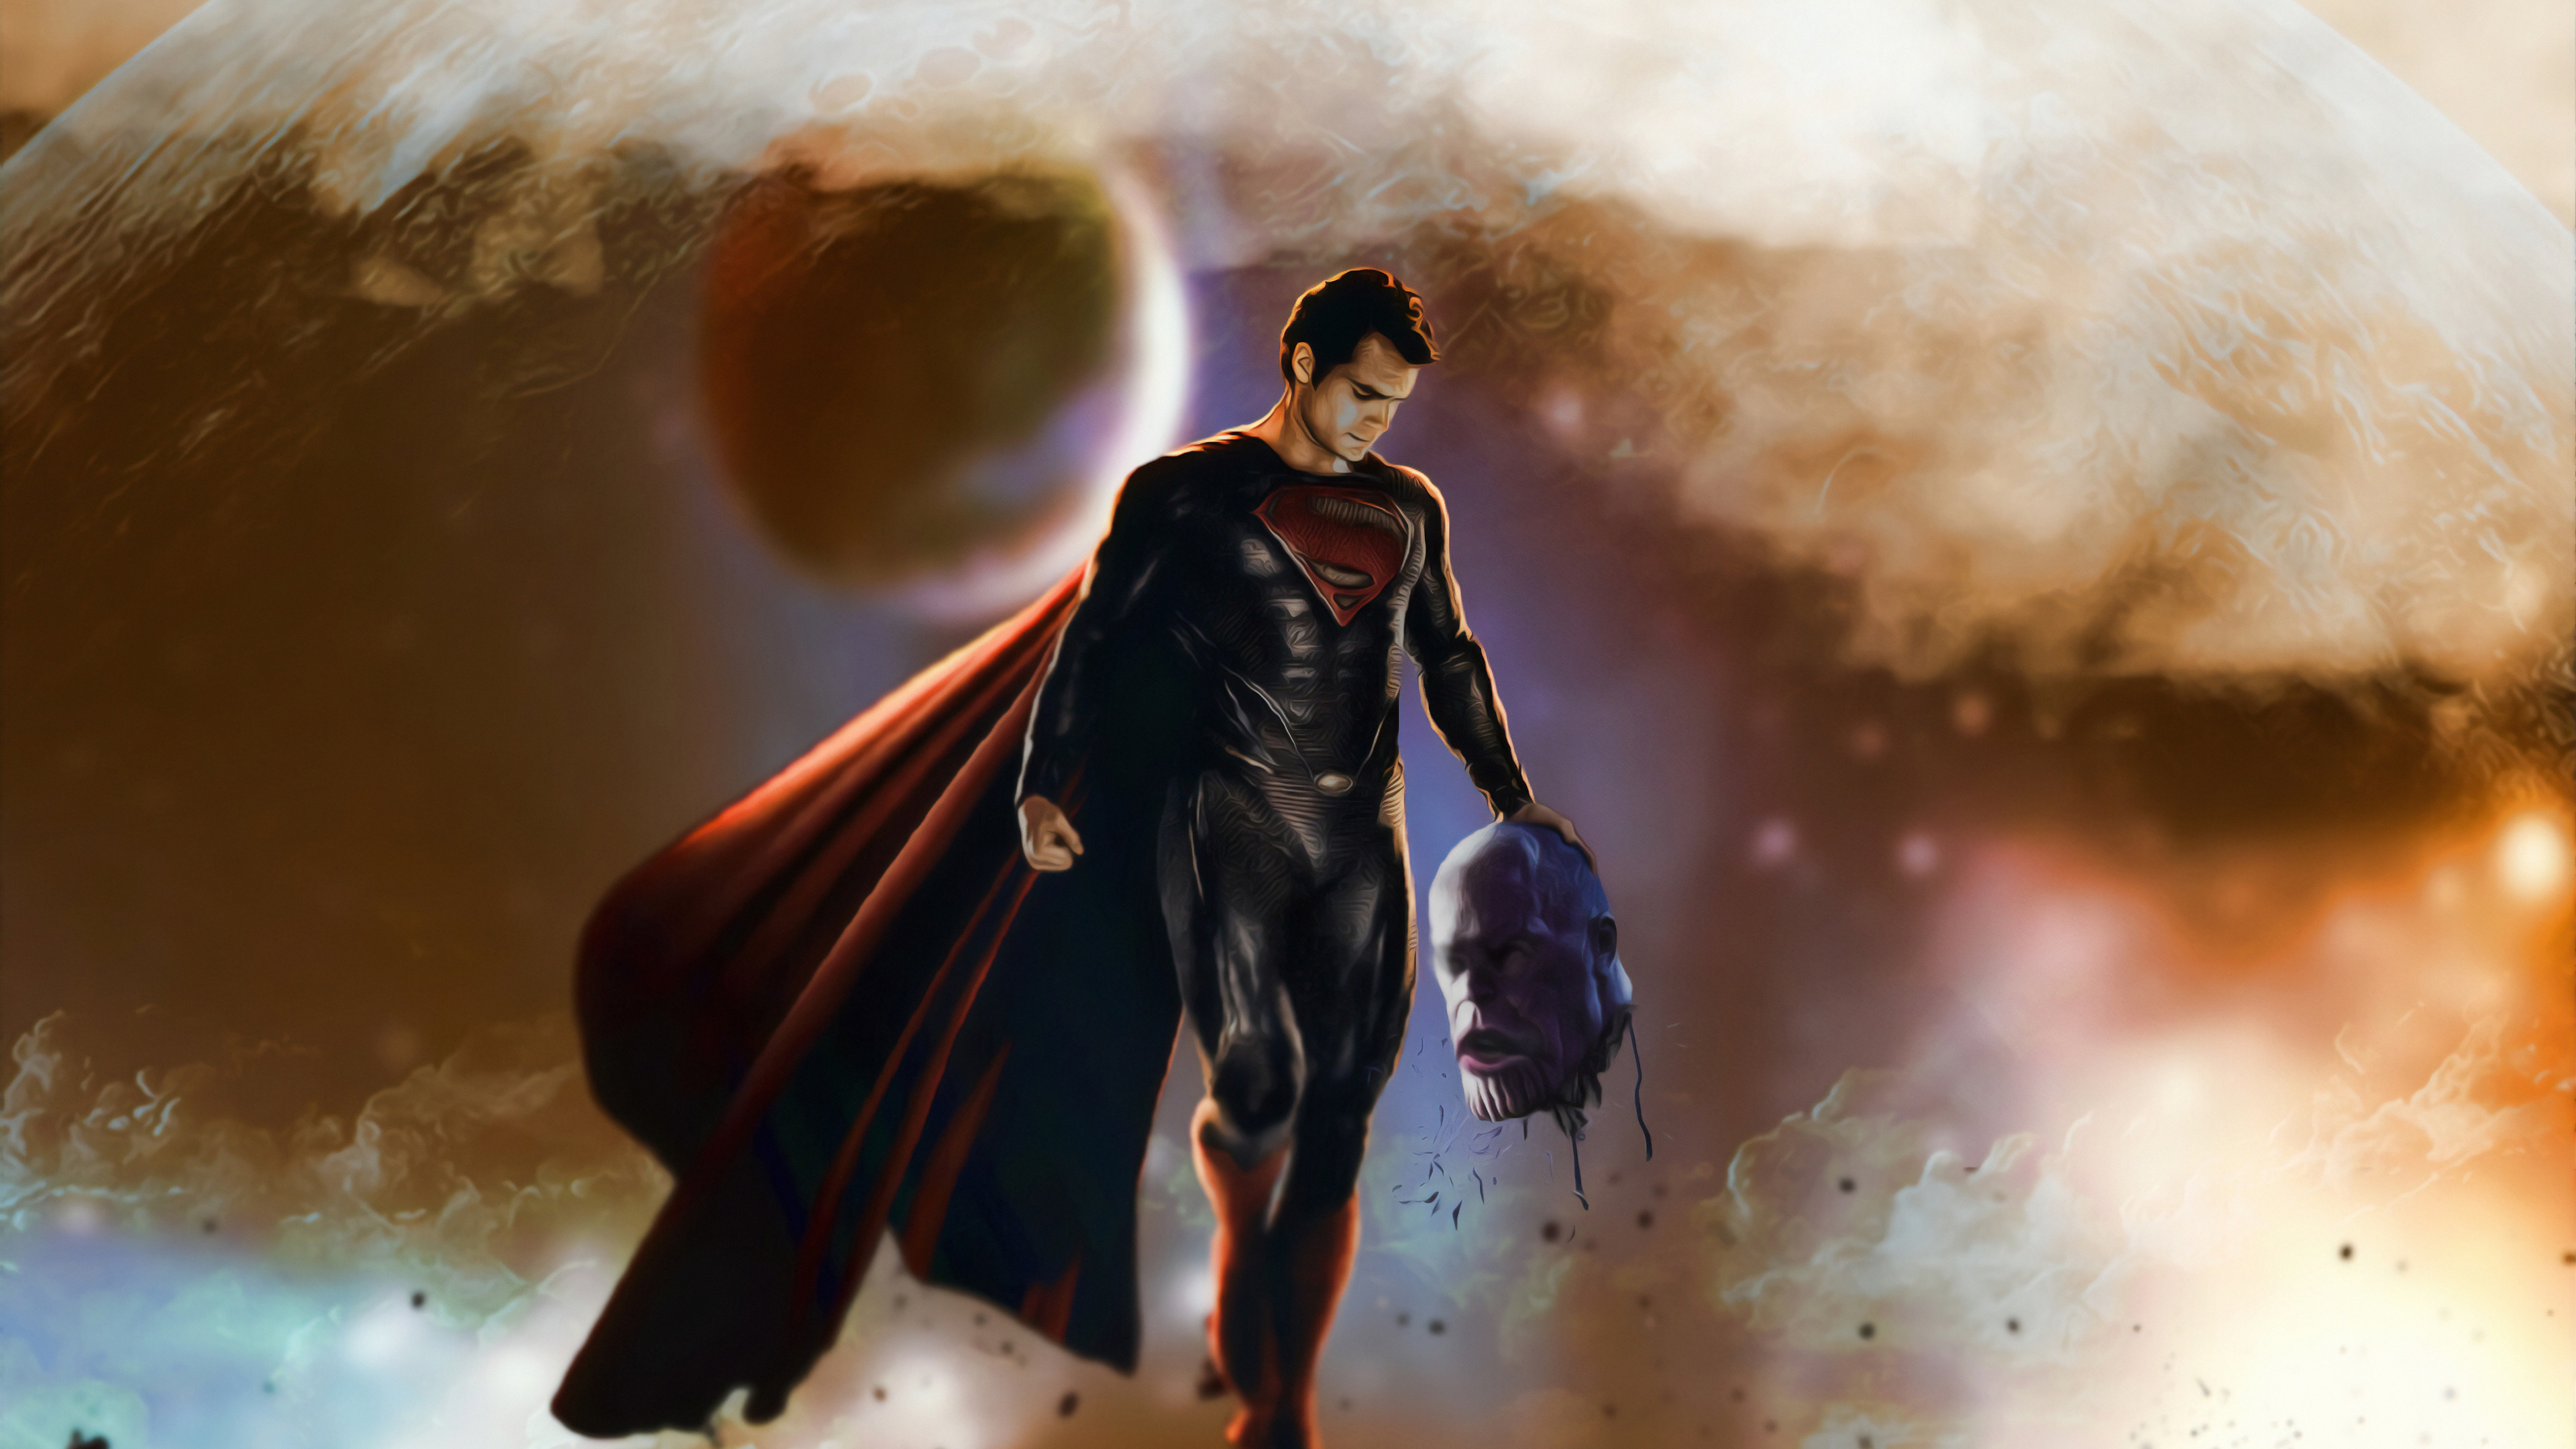 superman wallpaper,superhero,fictional character,batman,superman,cg artwork